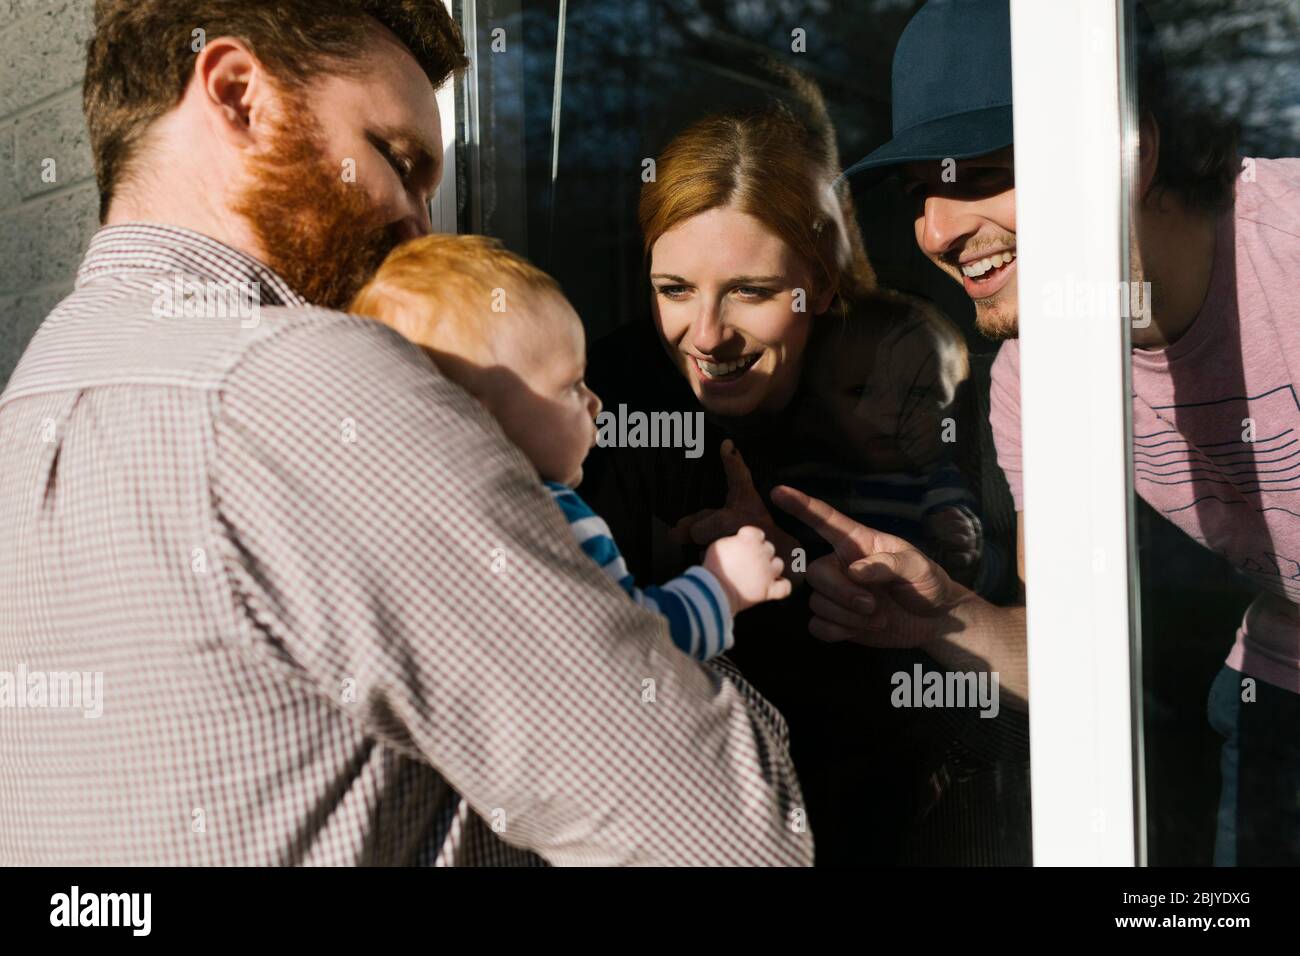 USA, Georgia, Atlanta, Mann mit Baby-Sohn (2-5 Monate) Besuch Familie durch Fenster Stockfoto